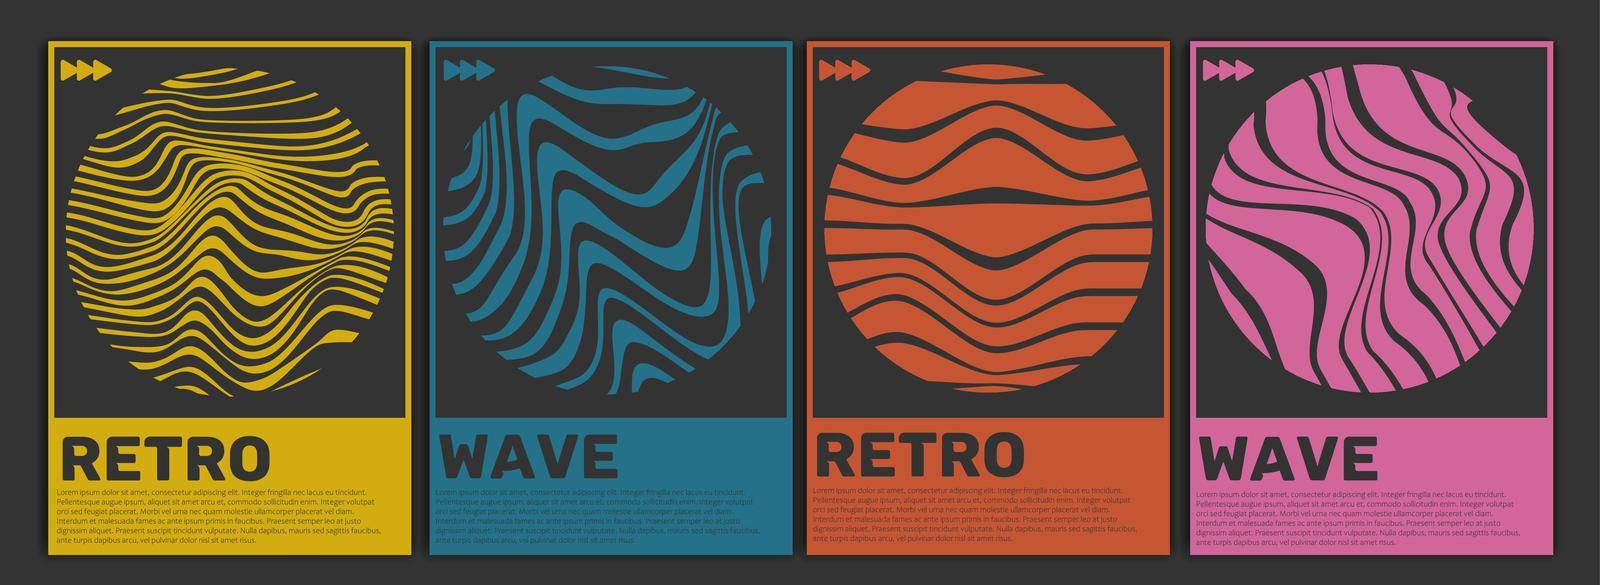 Set of retro swiss design posters. Meta modern graphic desidn elments. Abstract modern geometric covers. Optic illusions art. Vector illustration